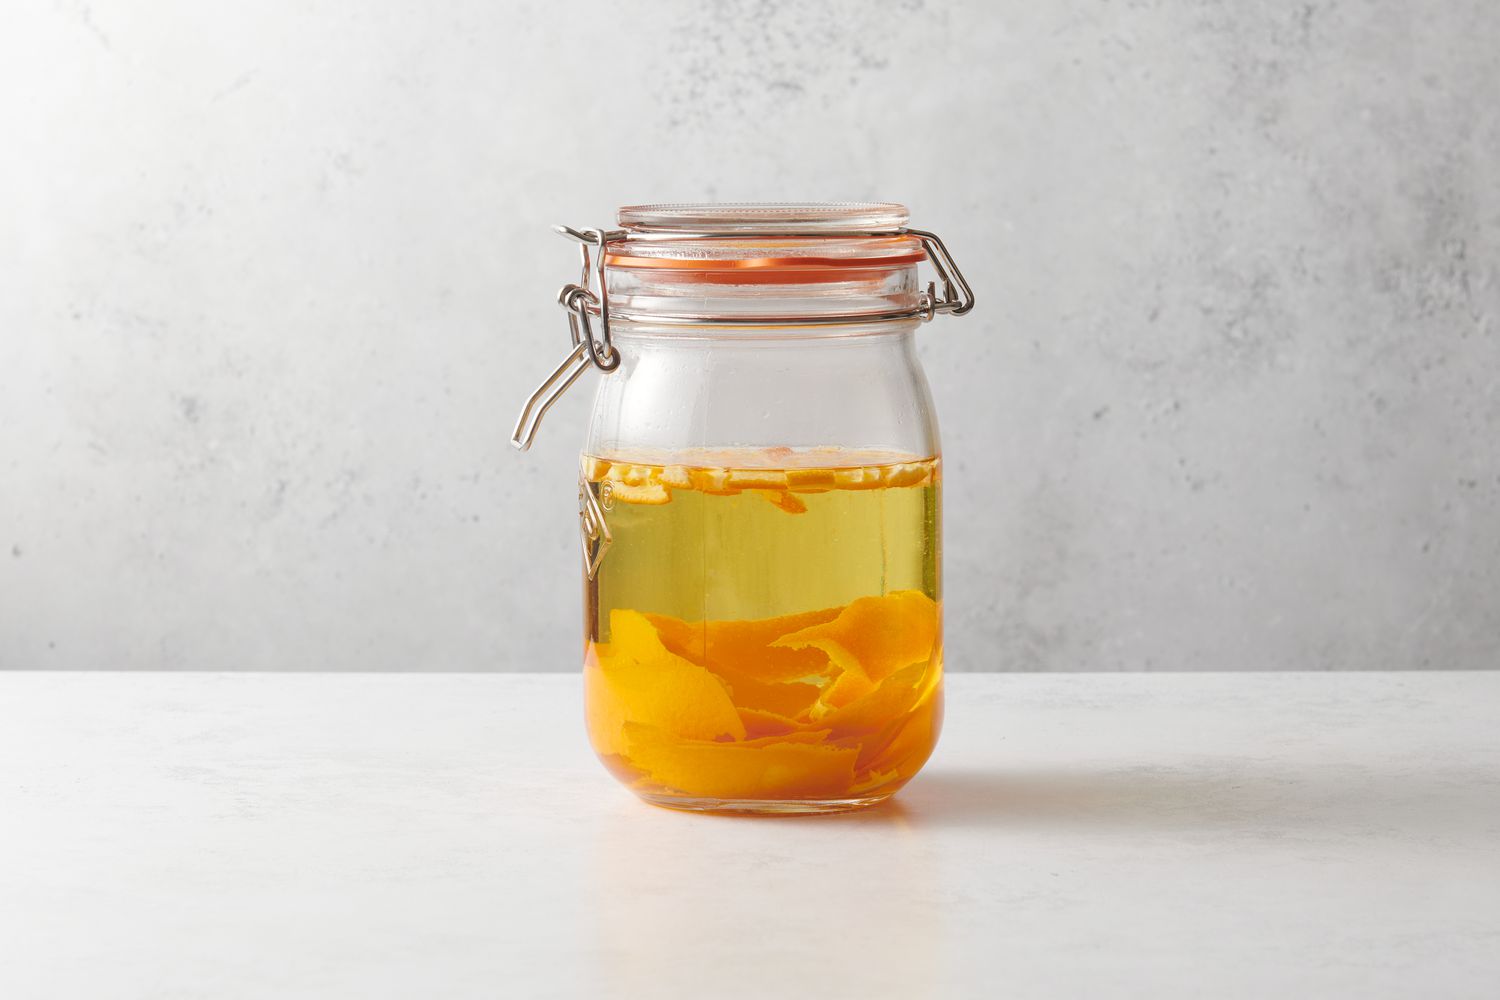 A jar with vodka, orange peels, and dried bitter orange peels